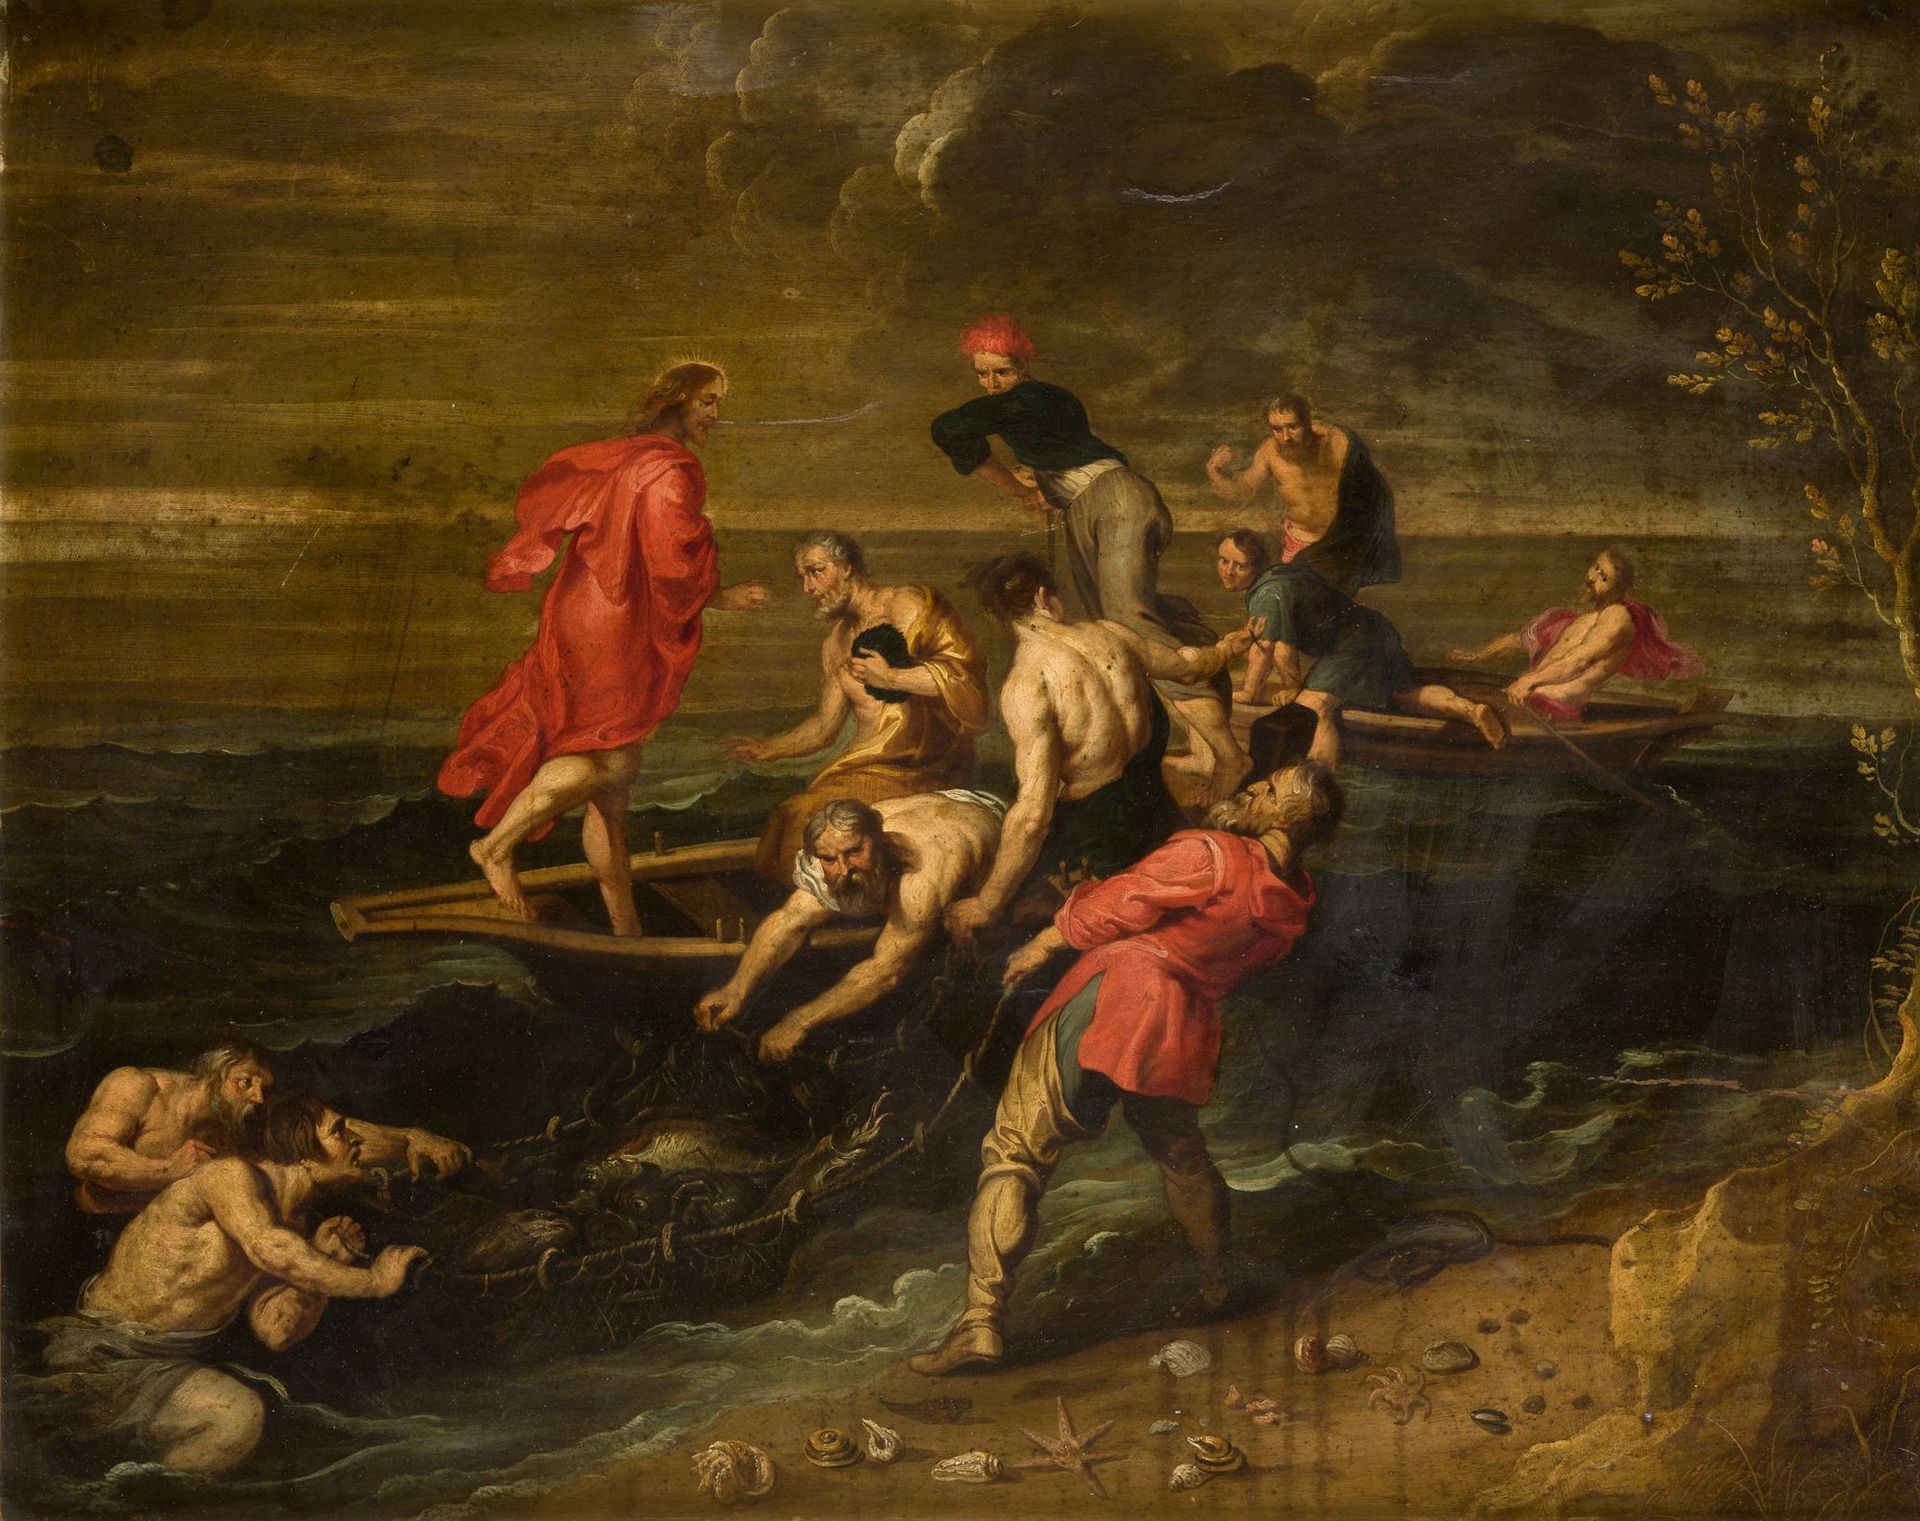 CIRCULO DE RUBENS (C. 17th / ?) "The miraculous catch" Oil on copper. 68 x 85 cm